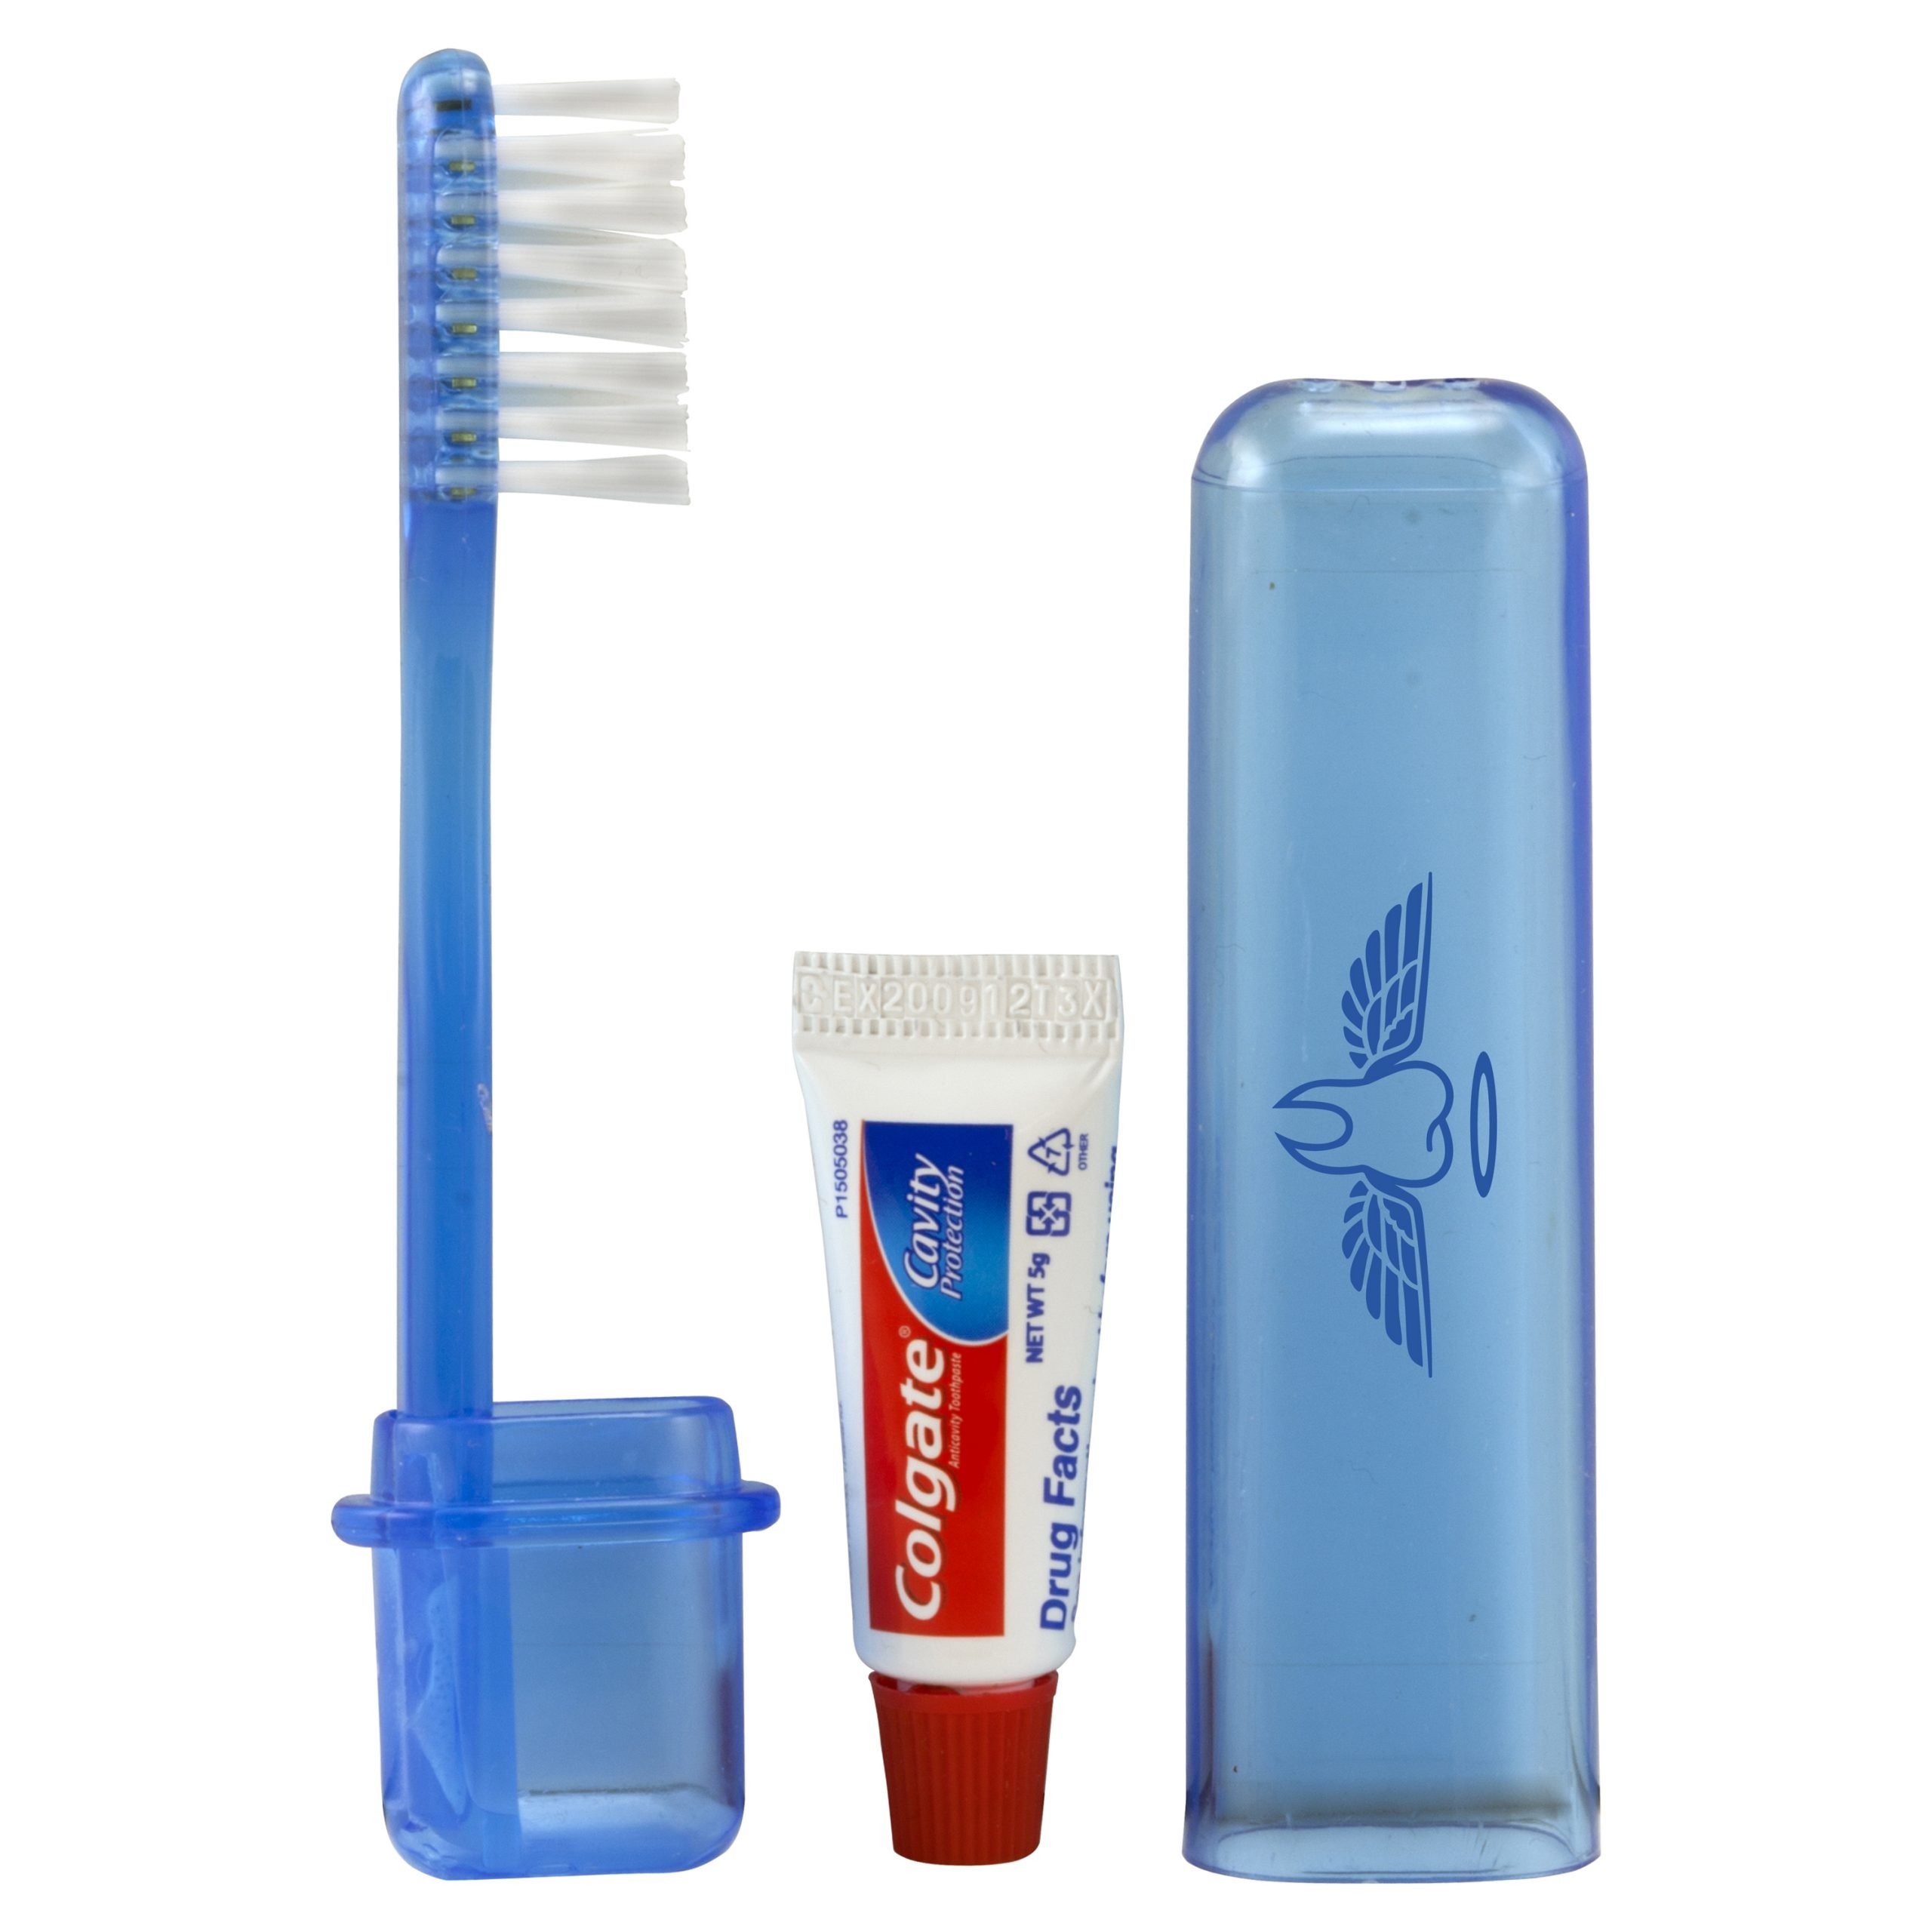 small travel kit toothbrush